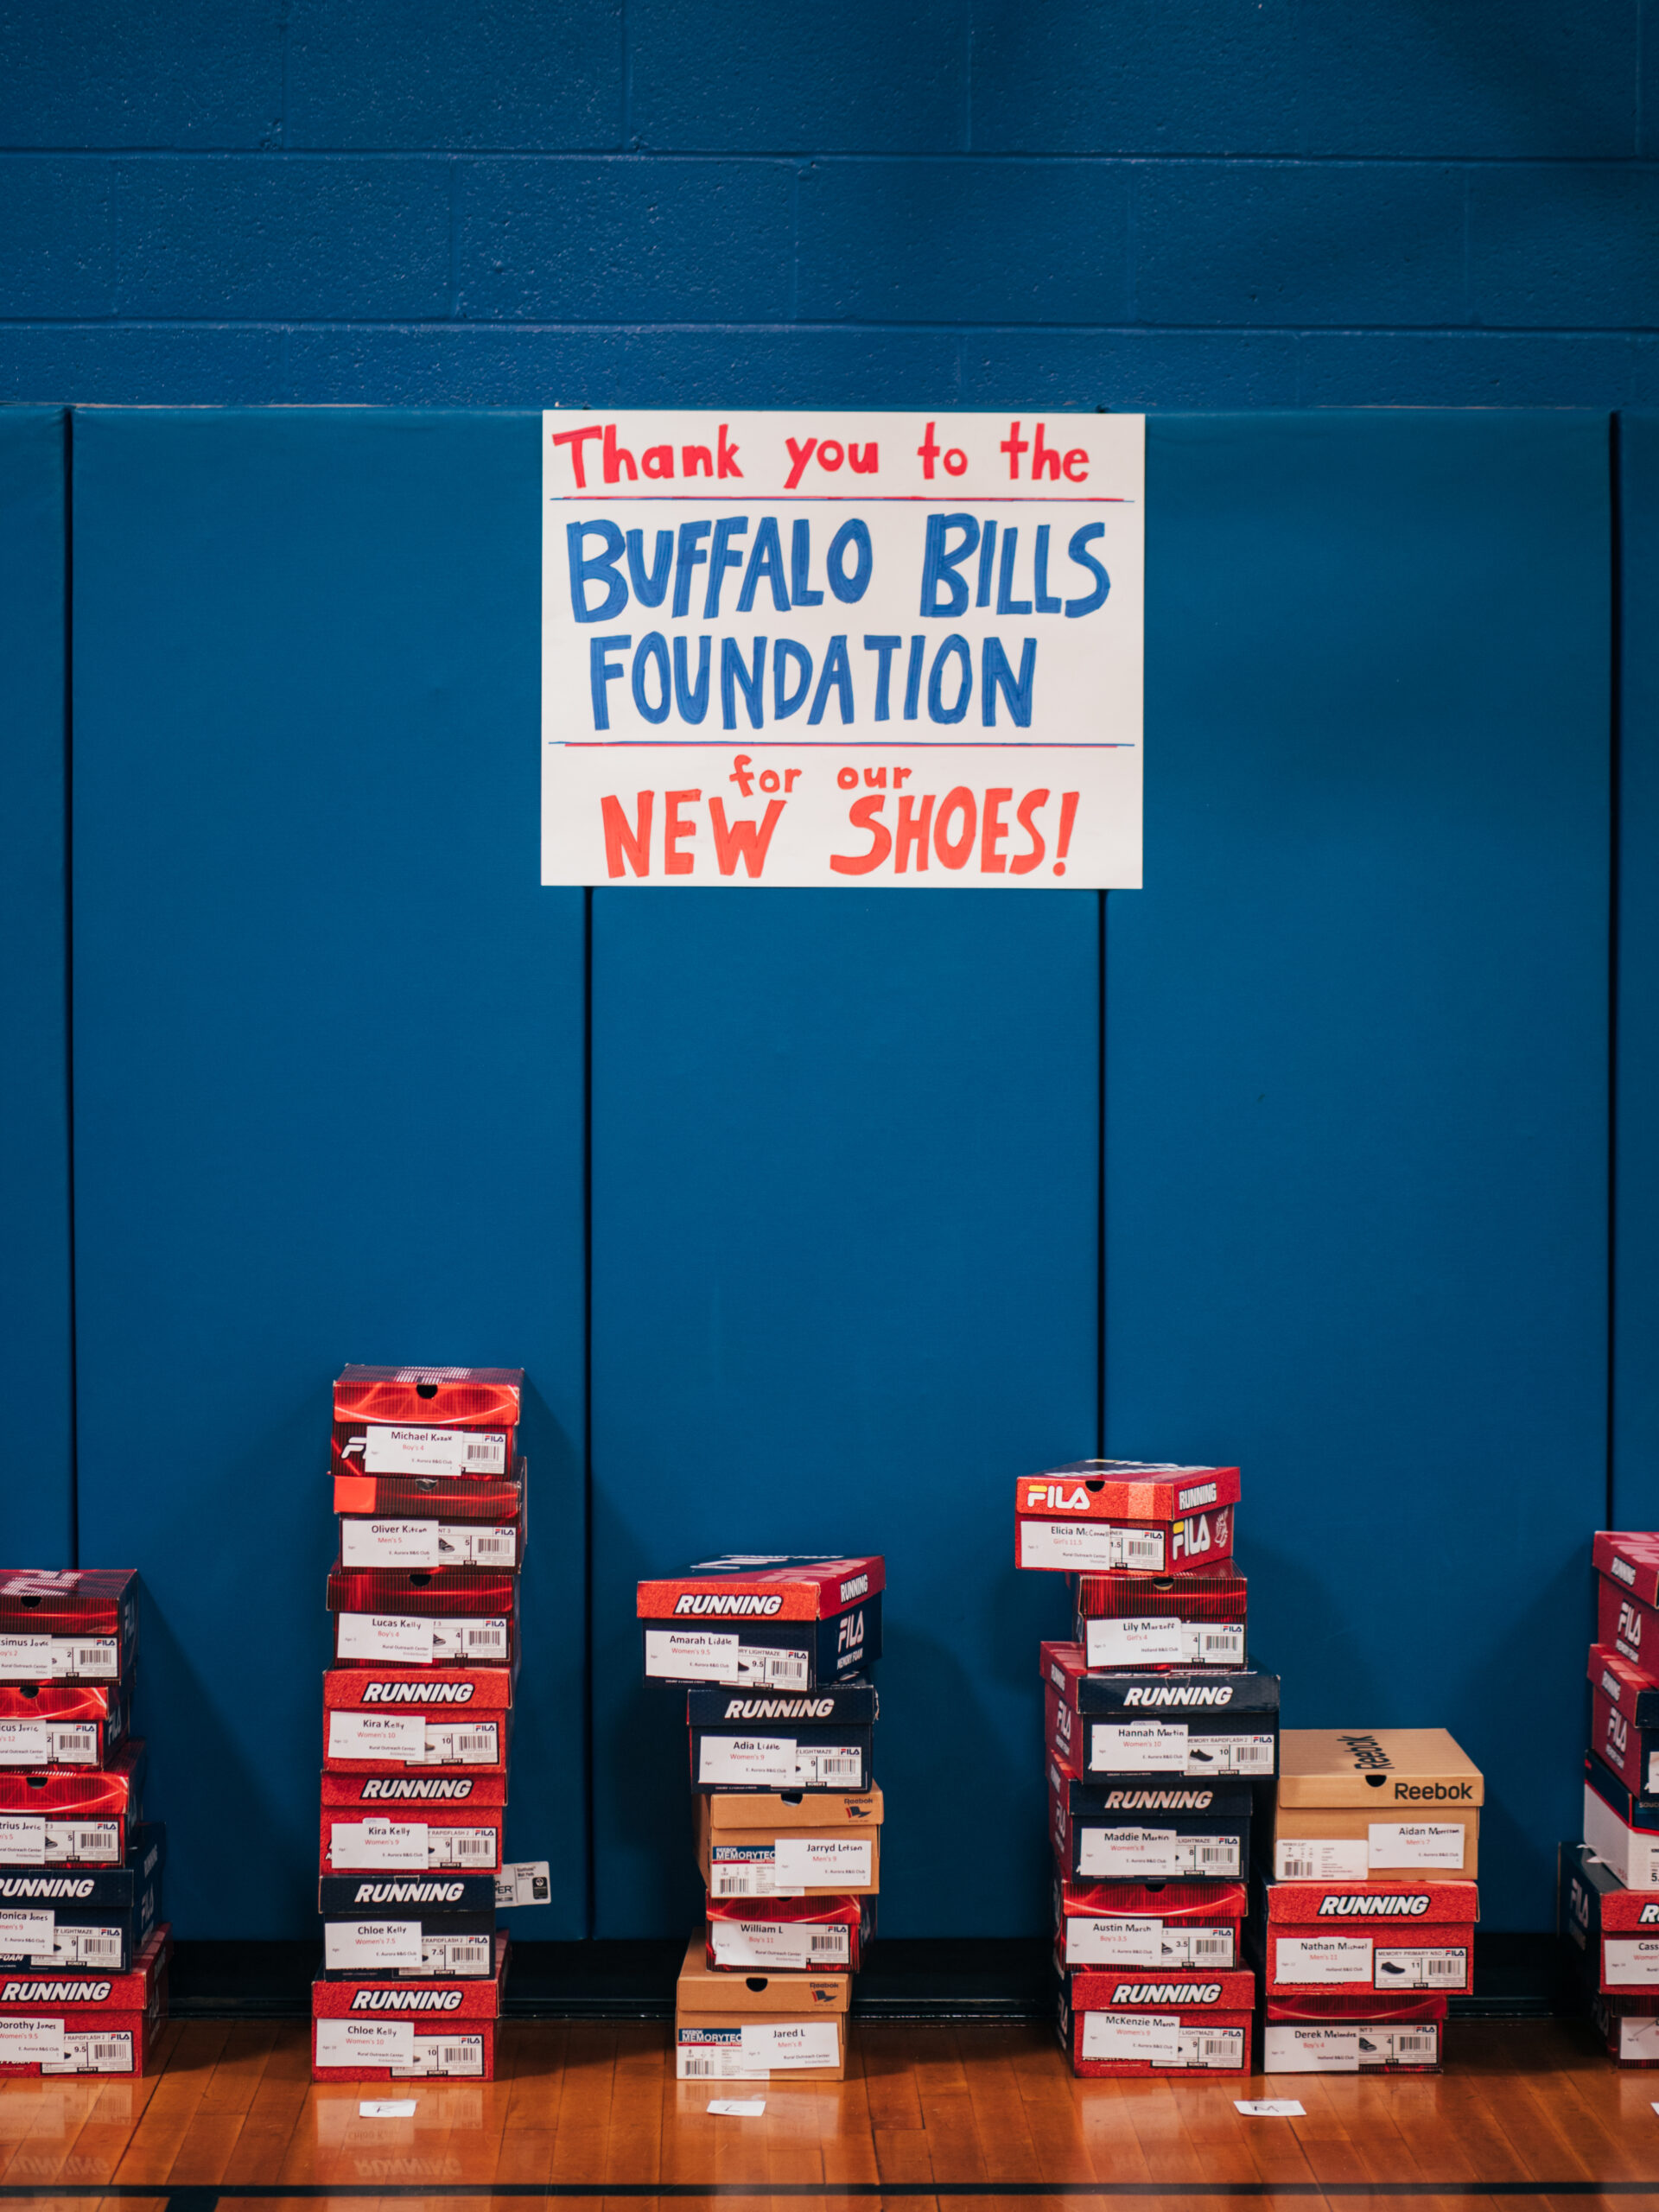 Thank you Buffalo Bills!